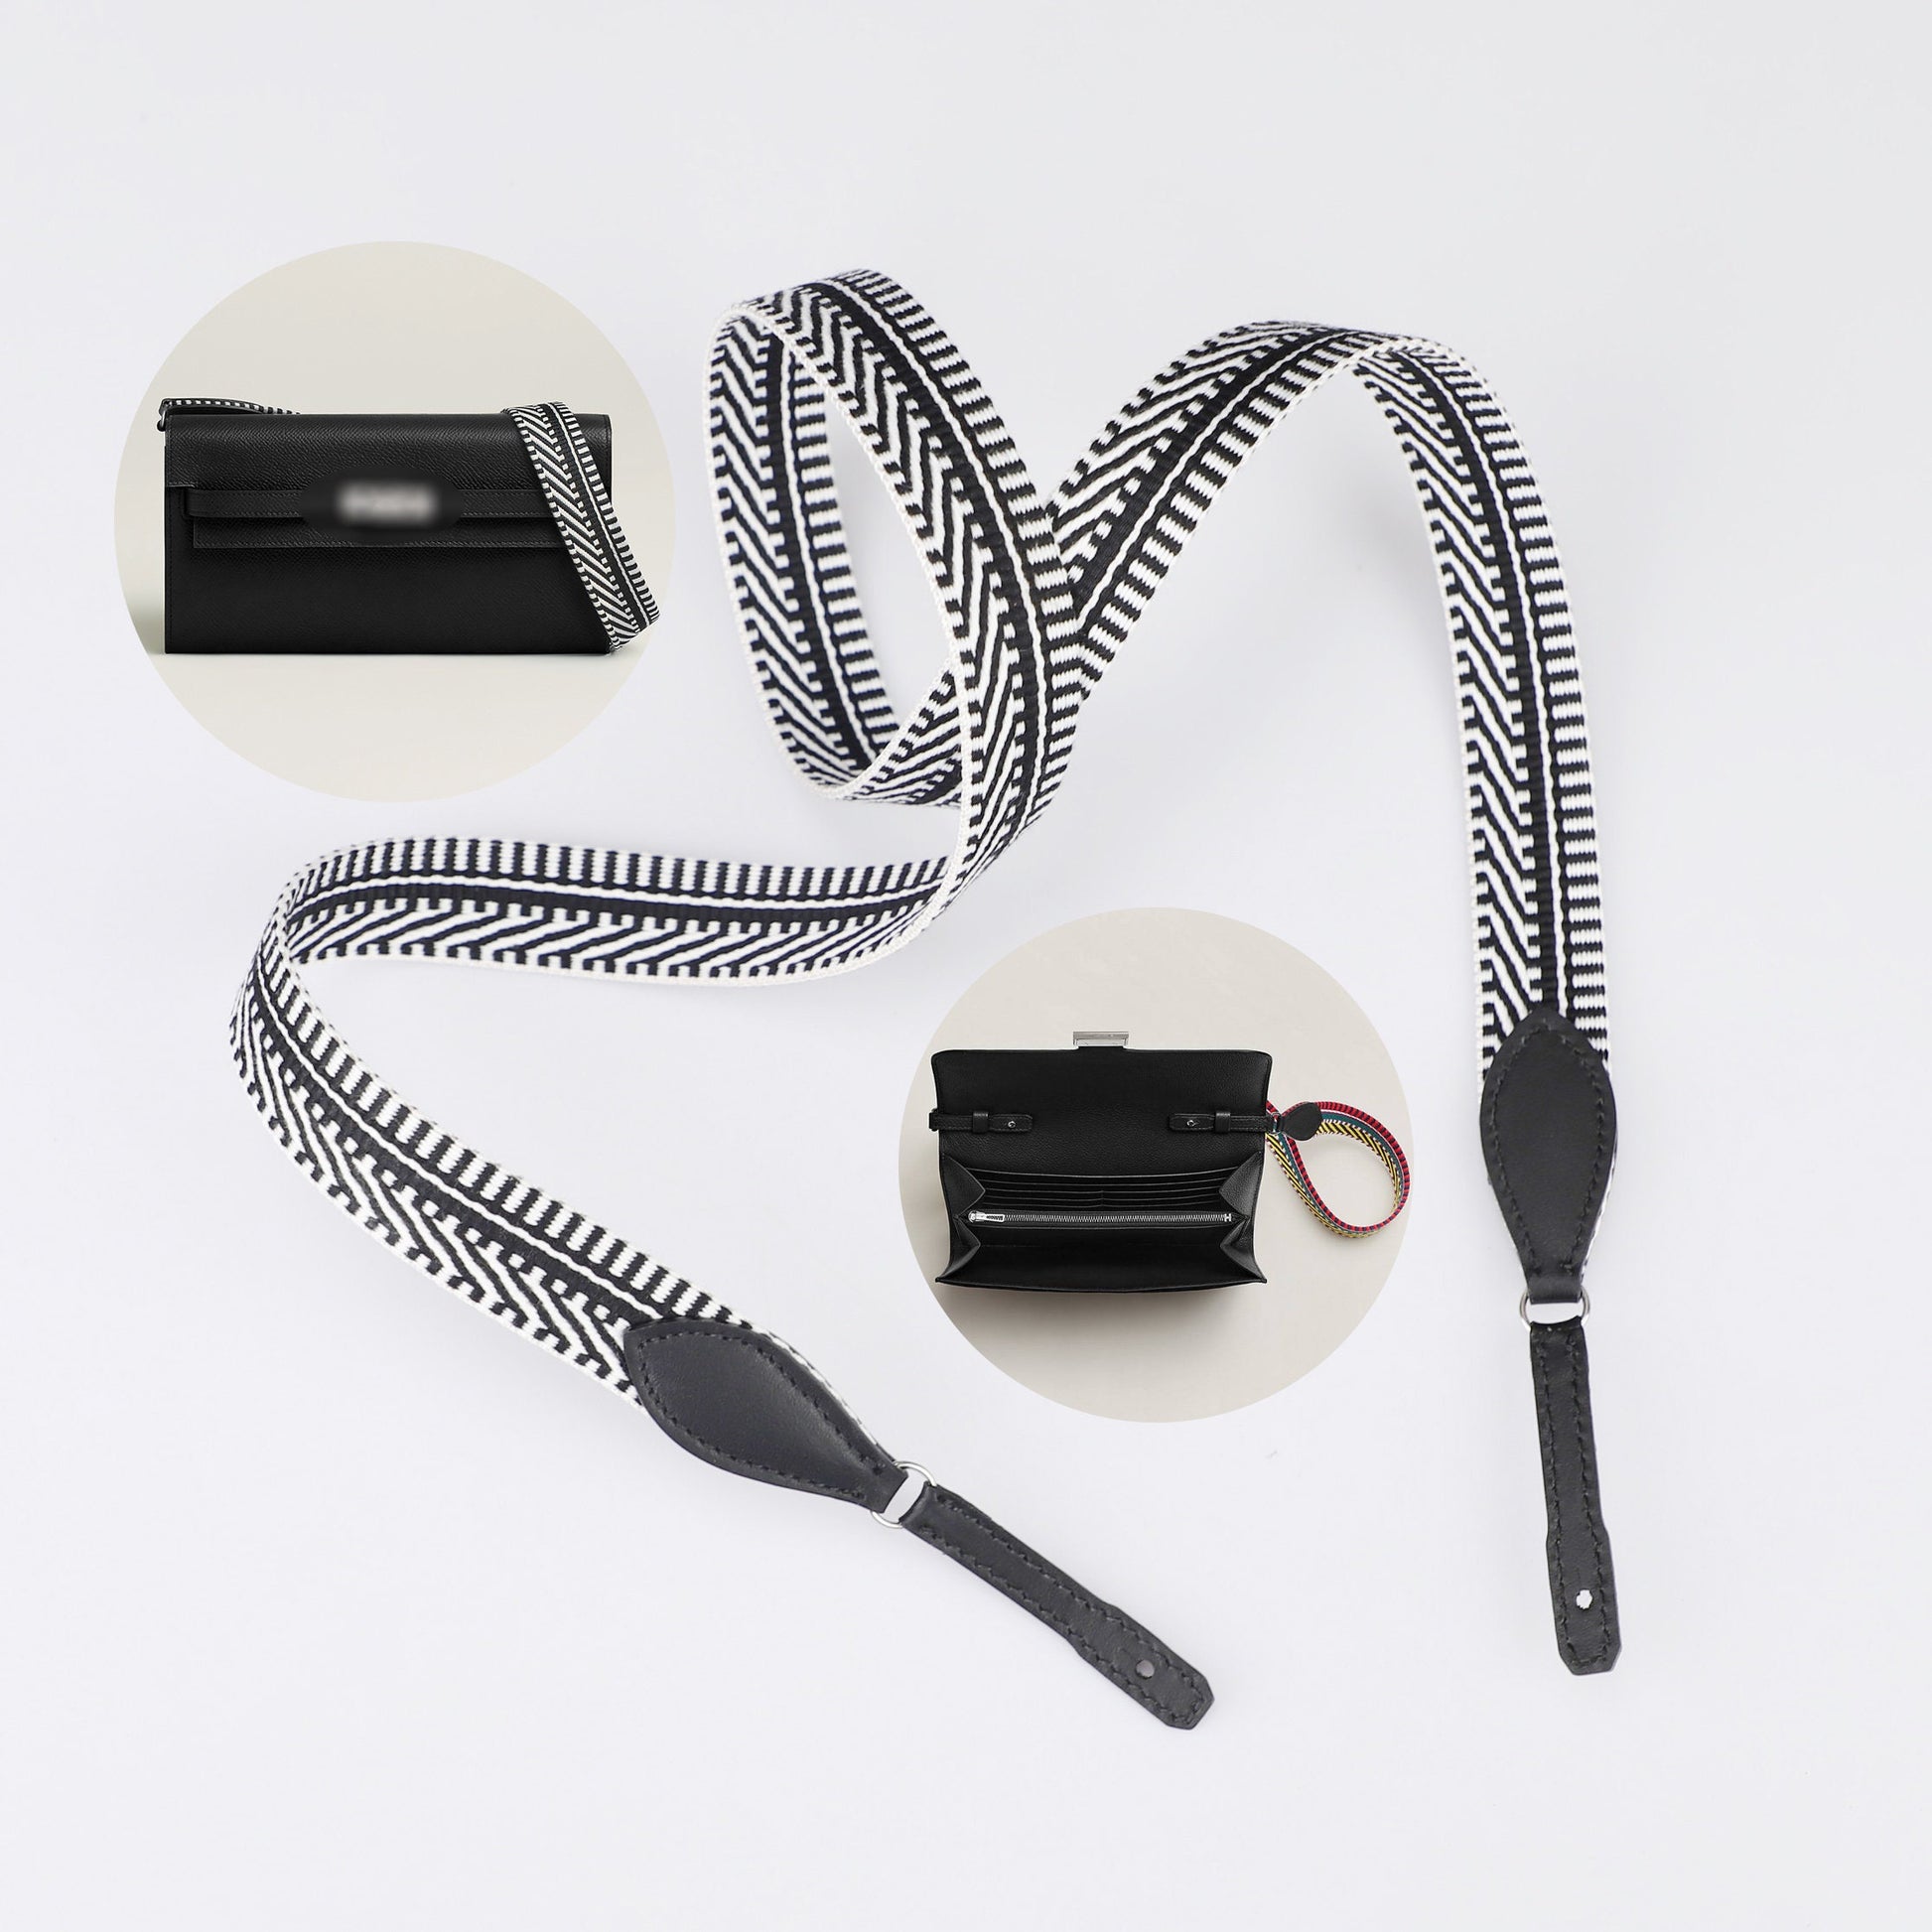 Handbag Shoulder Strap Adjustable - 25 mm x 130 cm, Accessories